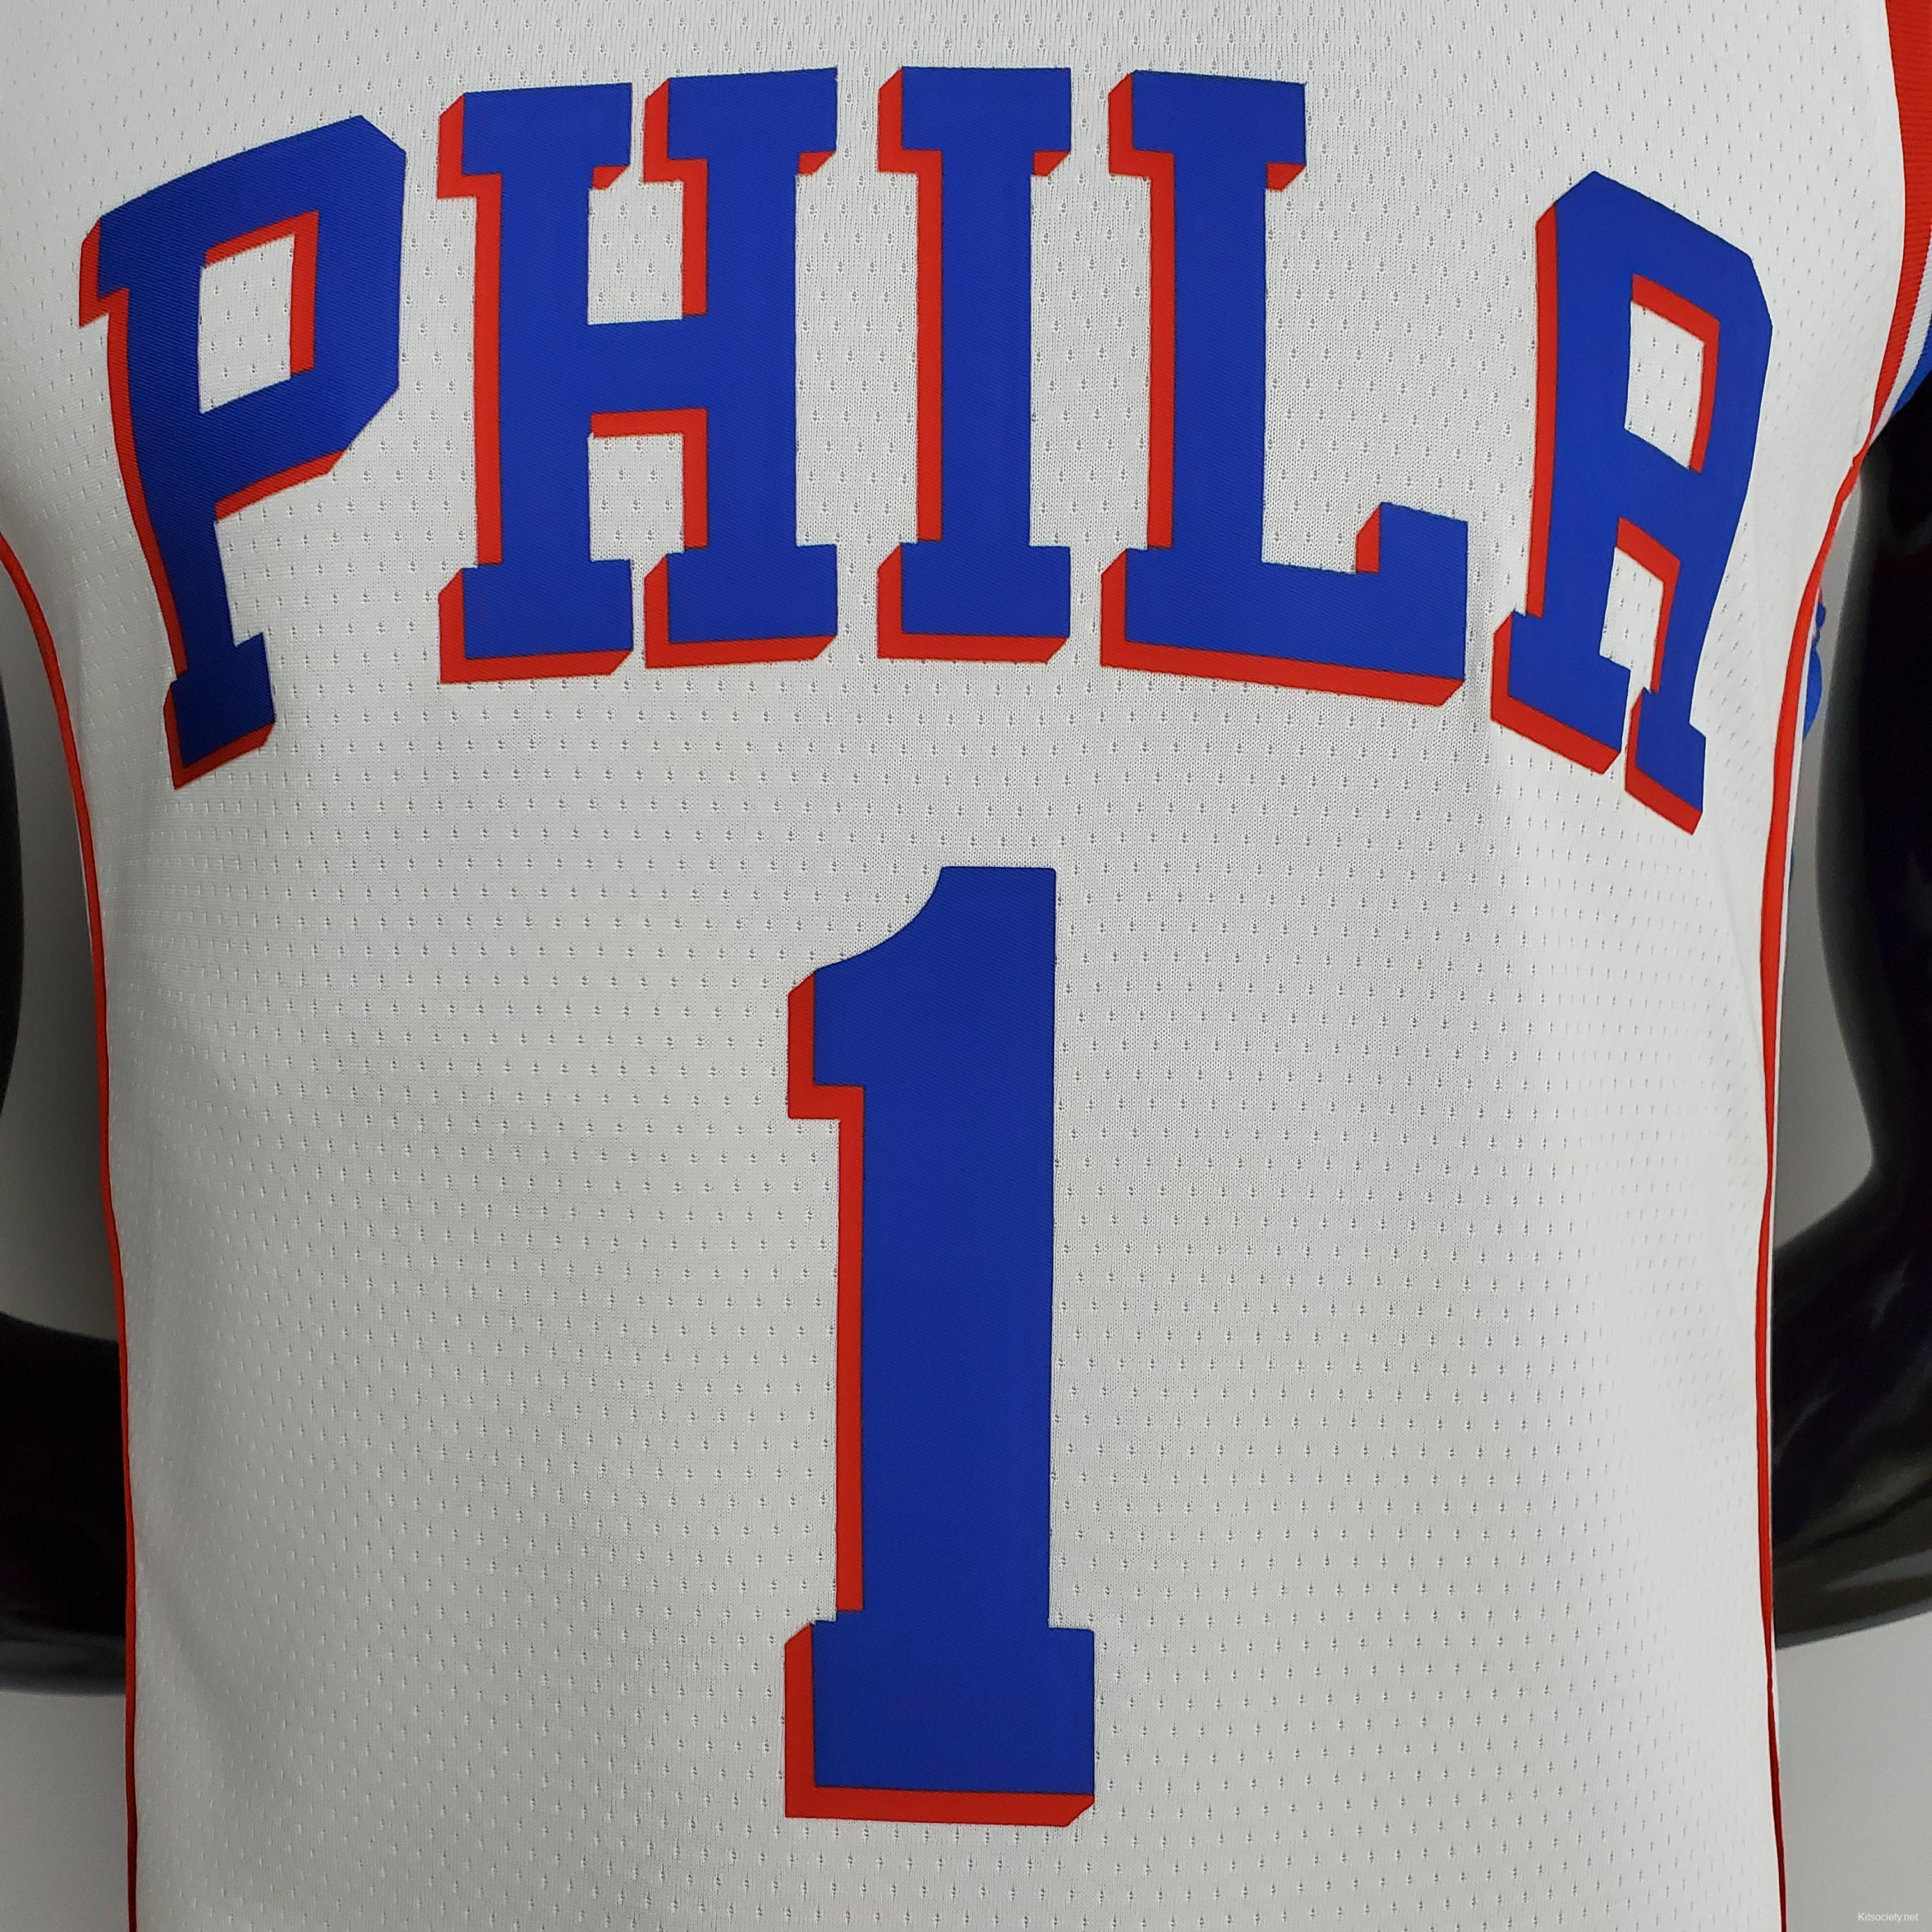 philadelphia 76ers throwback jersey